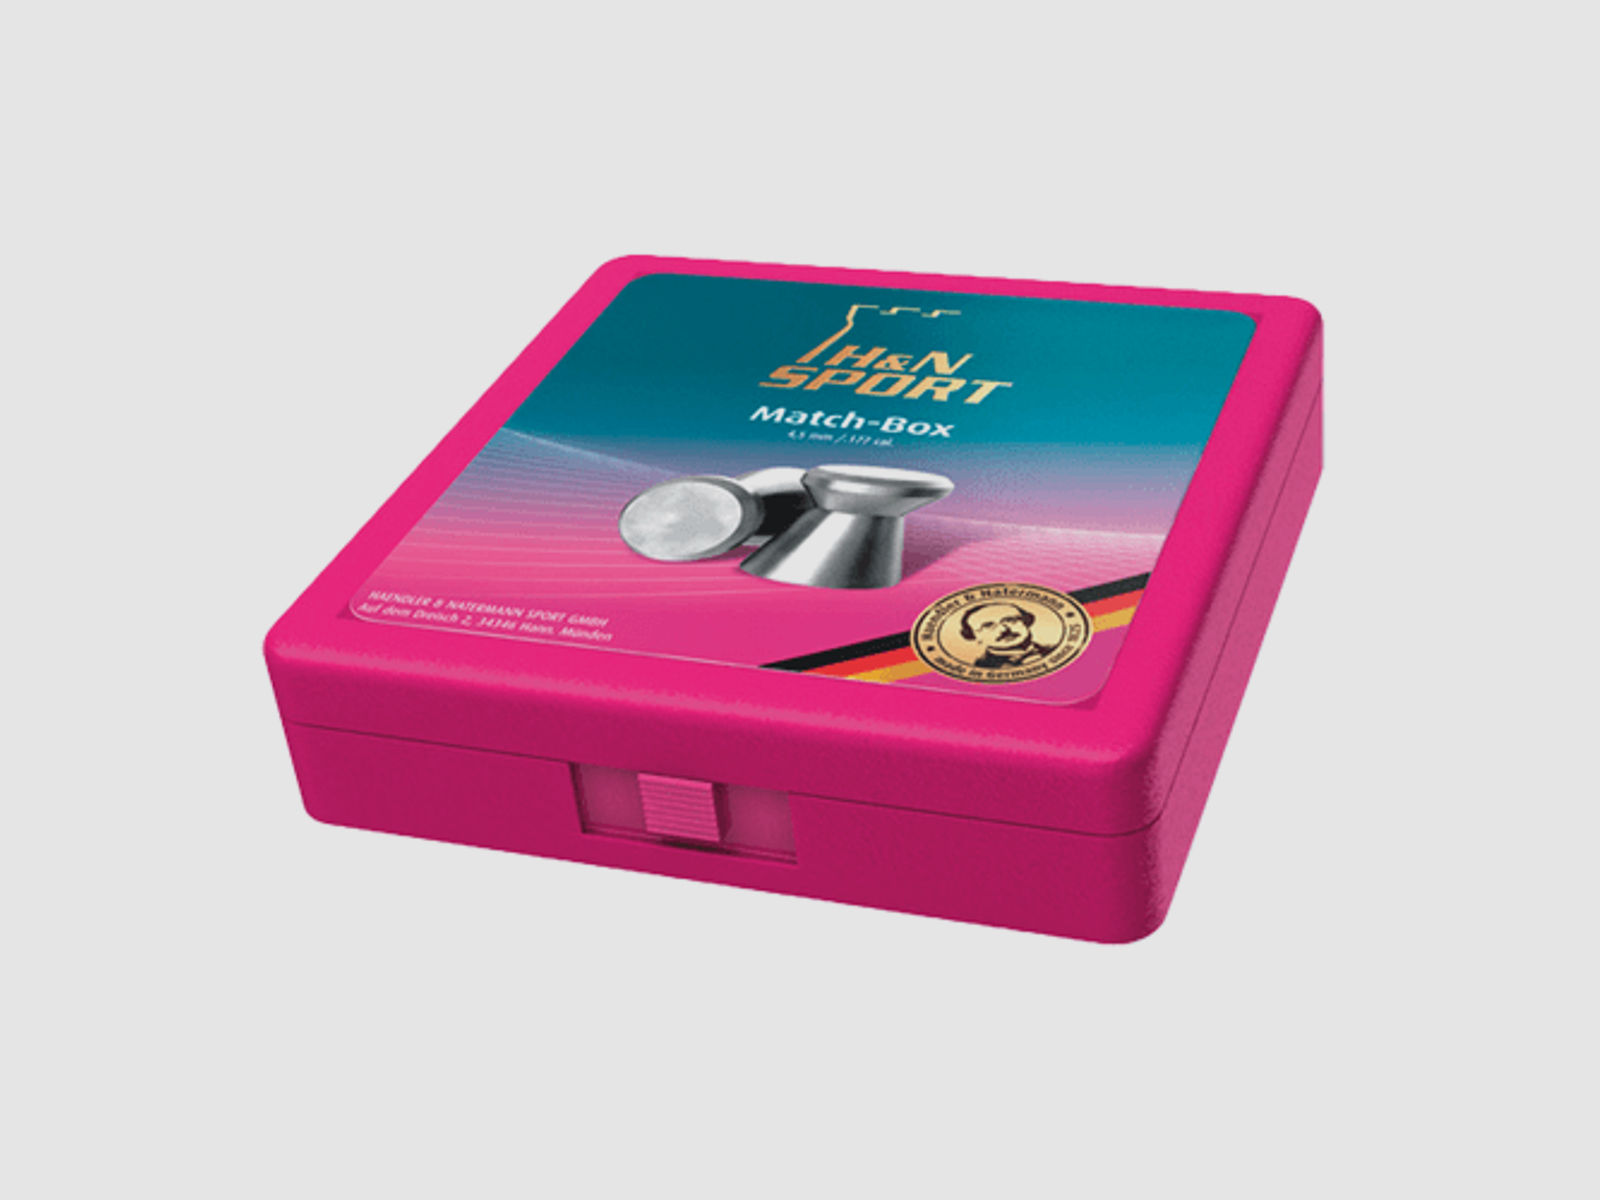 H&N Final Match Box Diabolos Aufbewahrungsbox - Pink